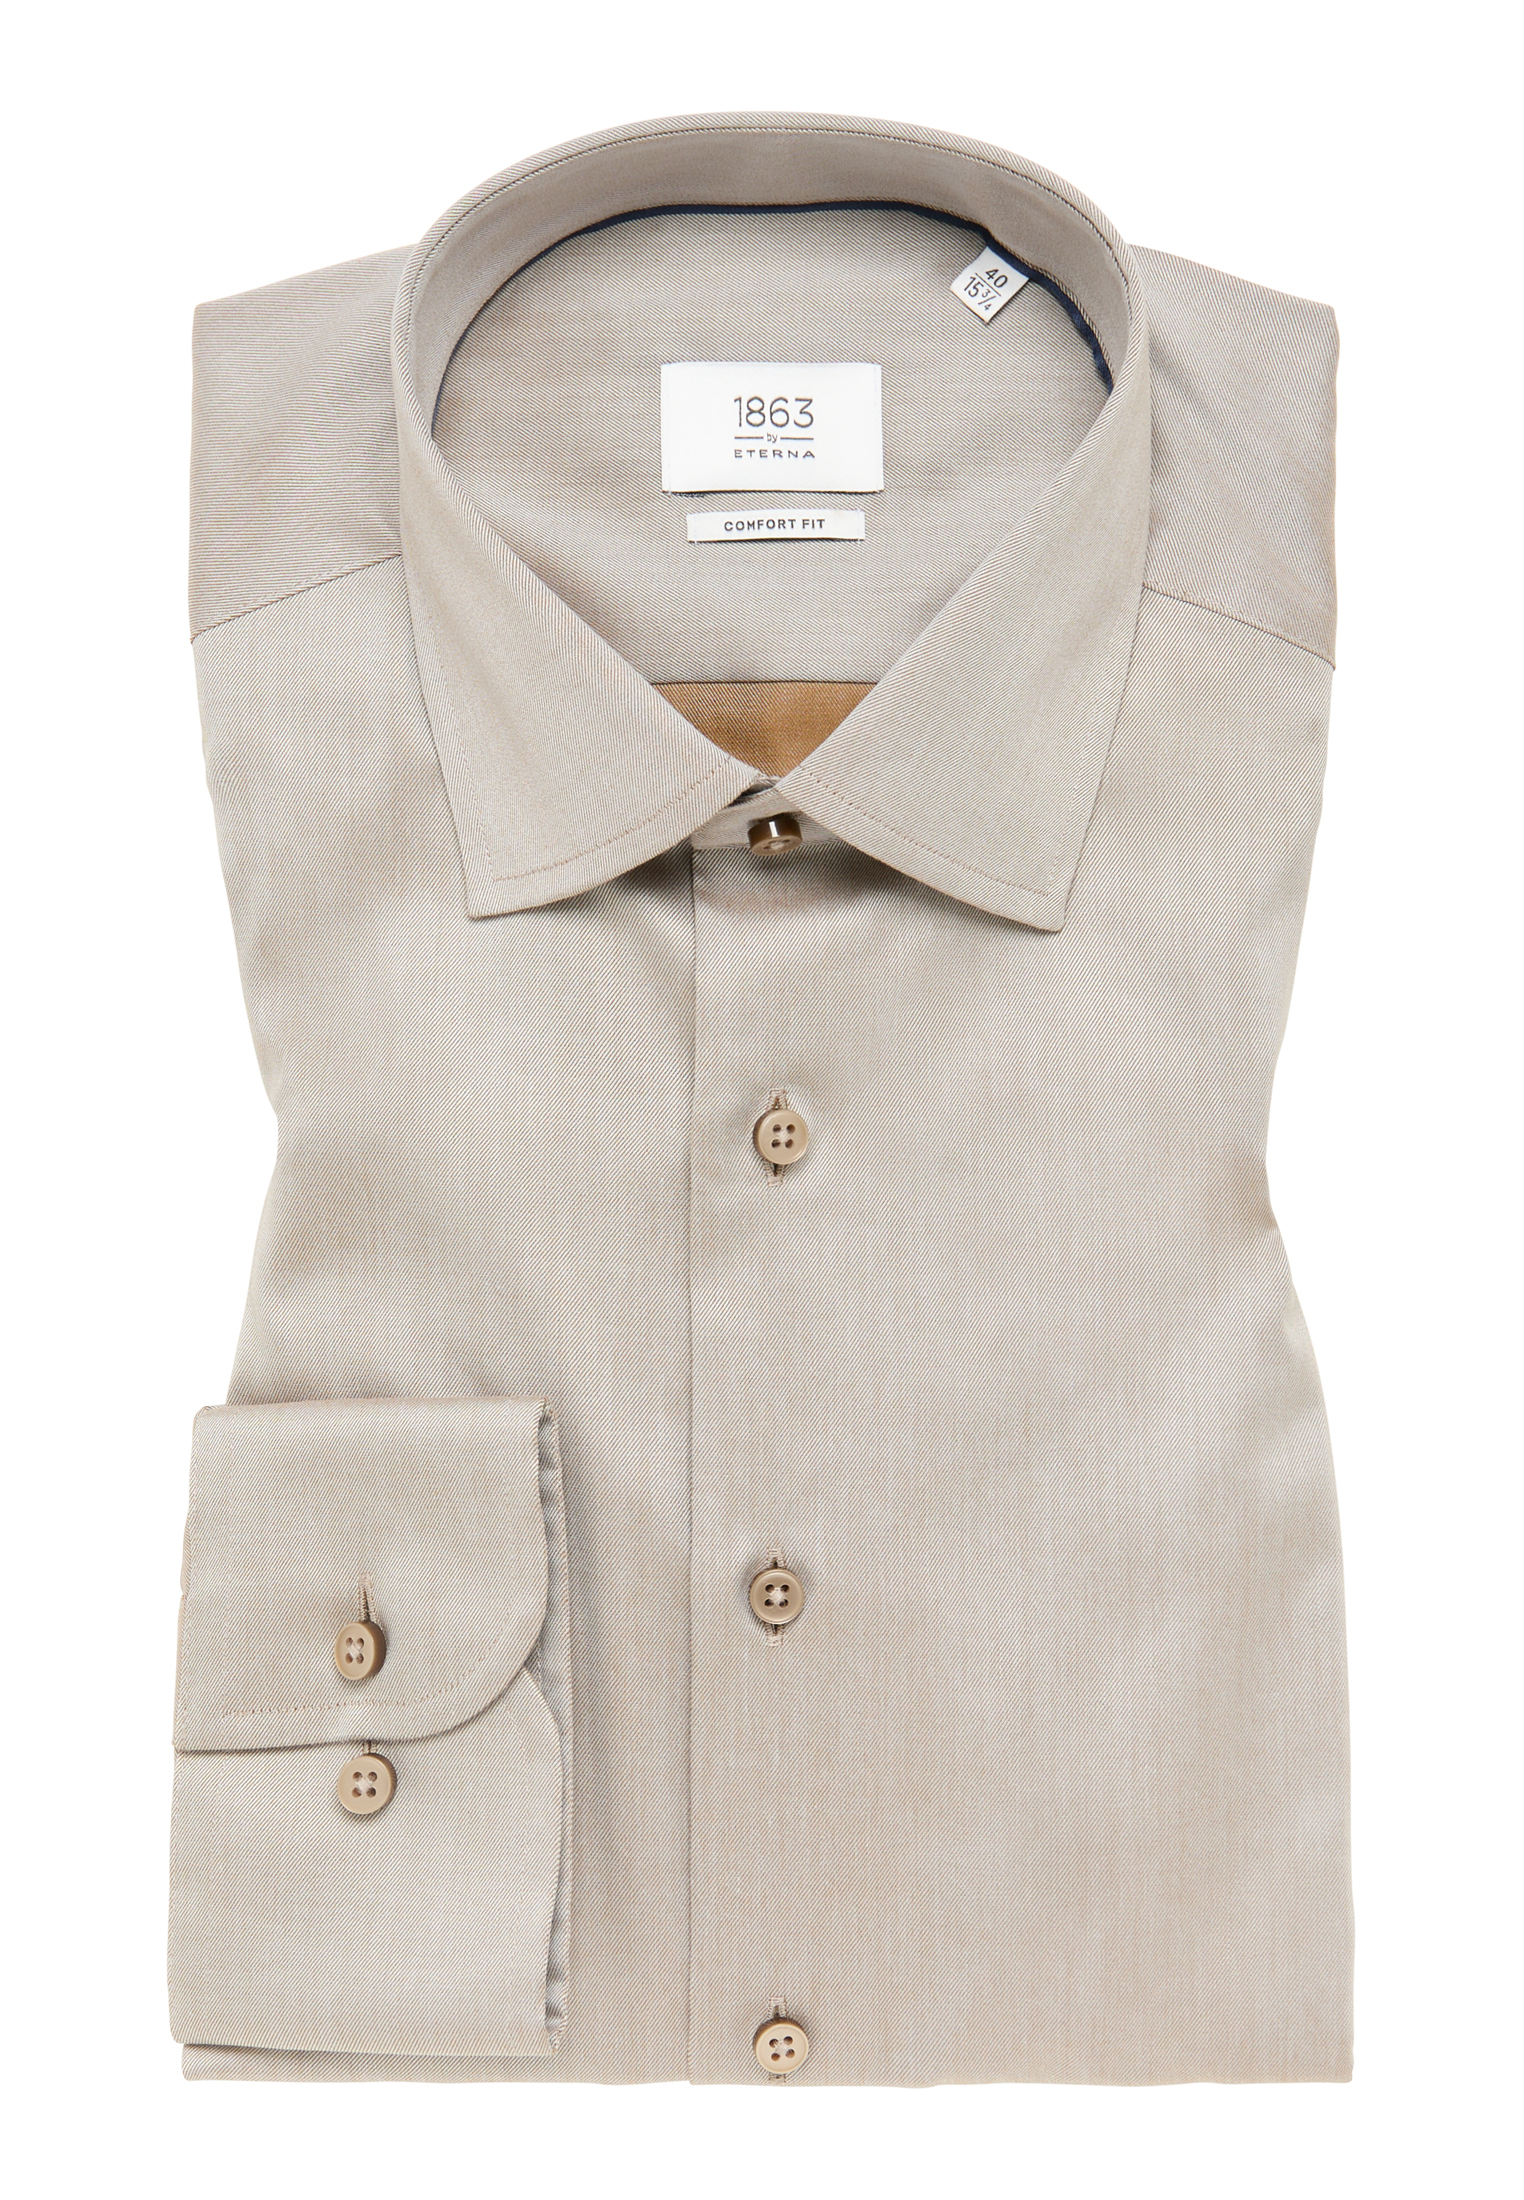 COMFORT FIT Luxury Shirt unifarben | taupe Langarm | 1SH04924-02-71-54-1/1 | taupe | 54 in